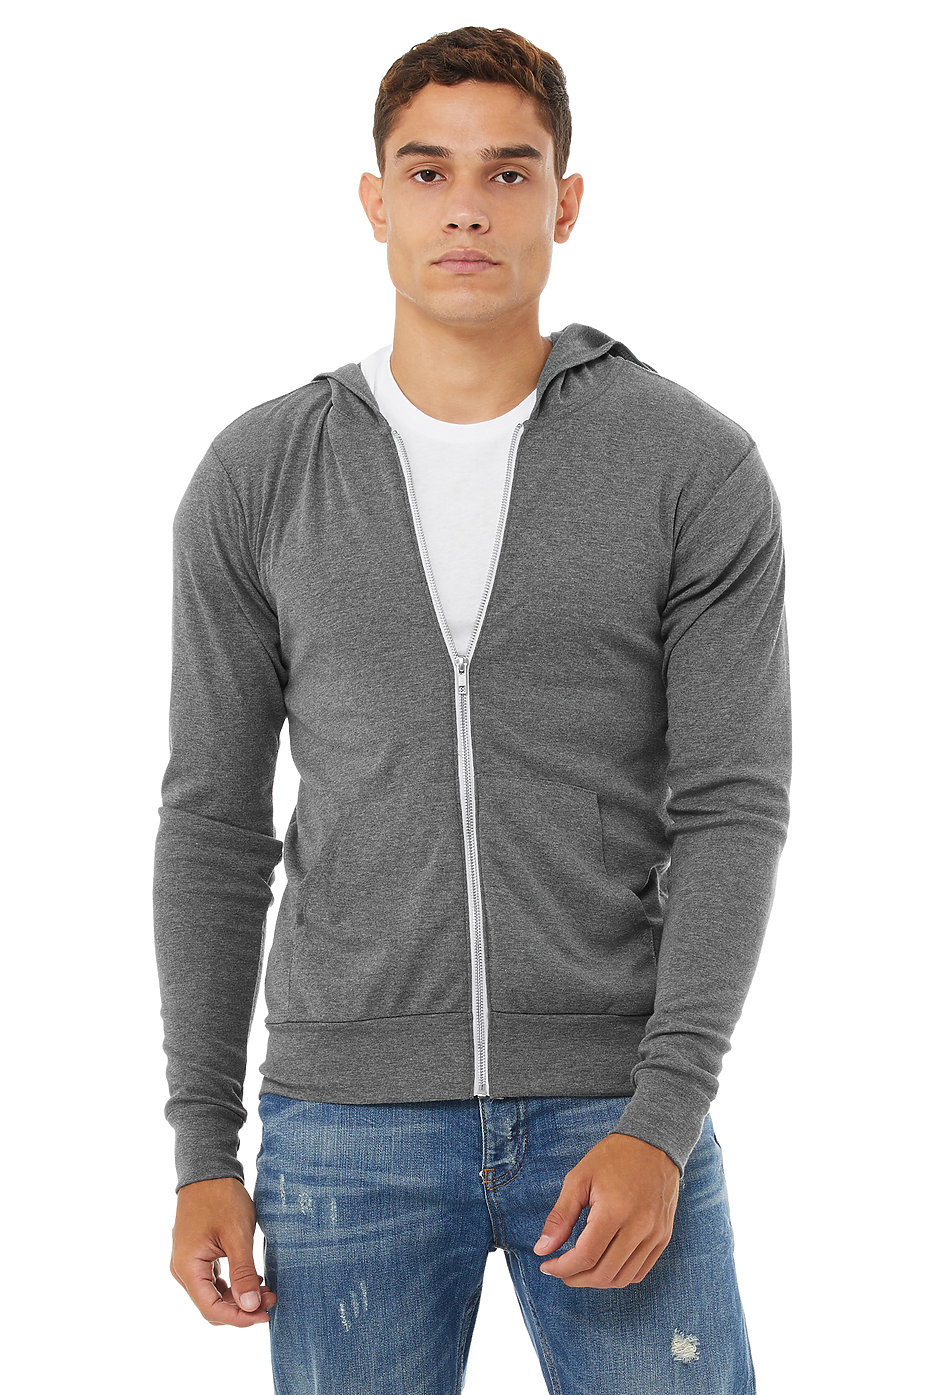 Kiyotoo Mens Hoodies Soft & Cozy Hooded Sweatshirts Basic Full Zip Up Sweatshirt Long Sleeve Lined Active Jackets 